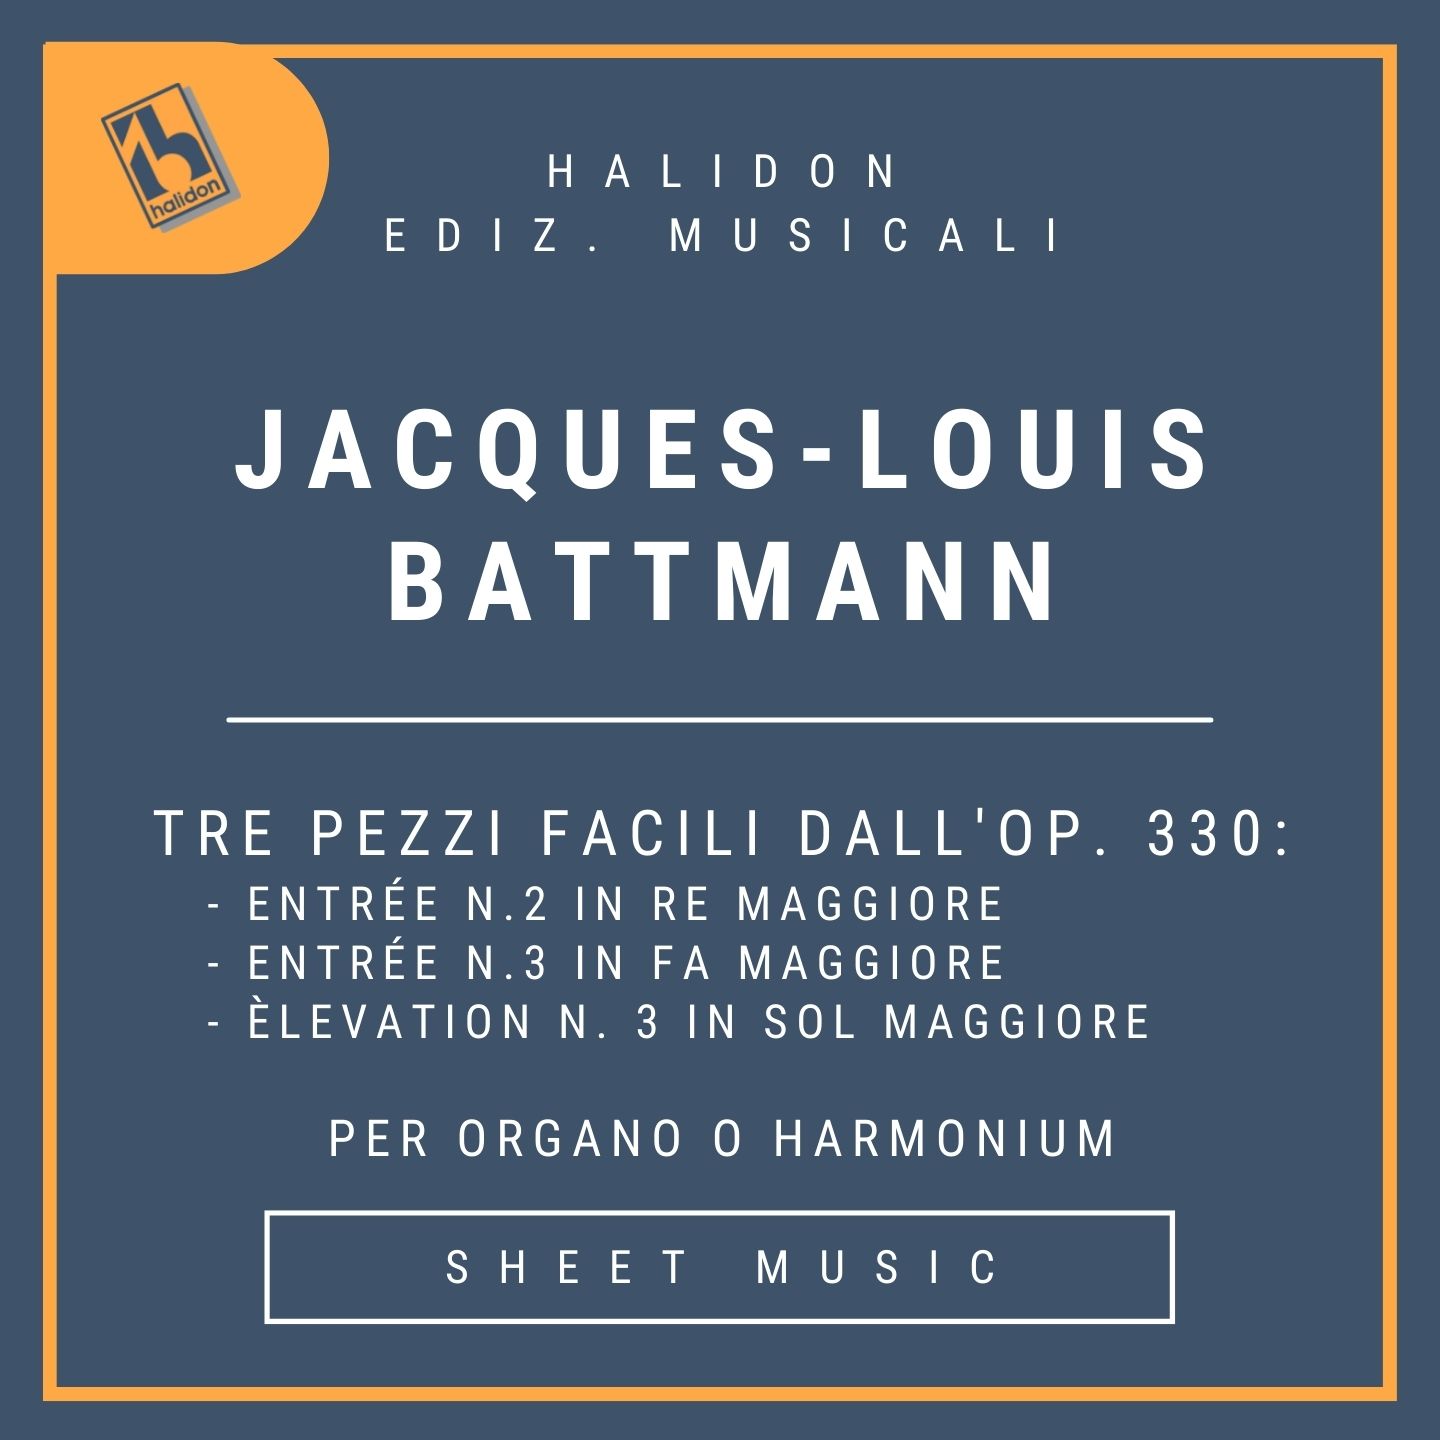 Jacques-Louis Battmann - Tre pezzi facili per organo dall'op. 330: Entrées n. 2 e n. 3, Élevation n. 3